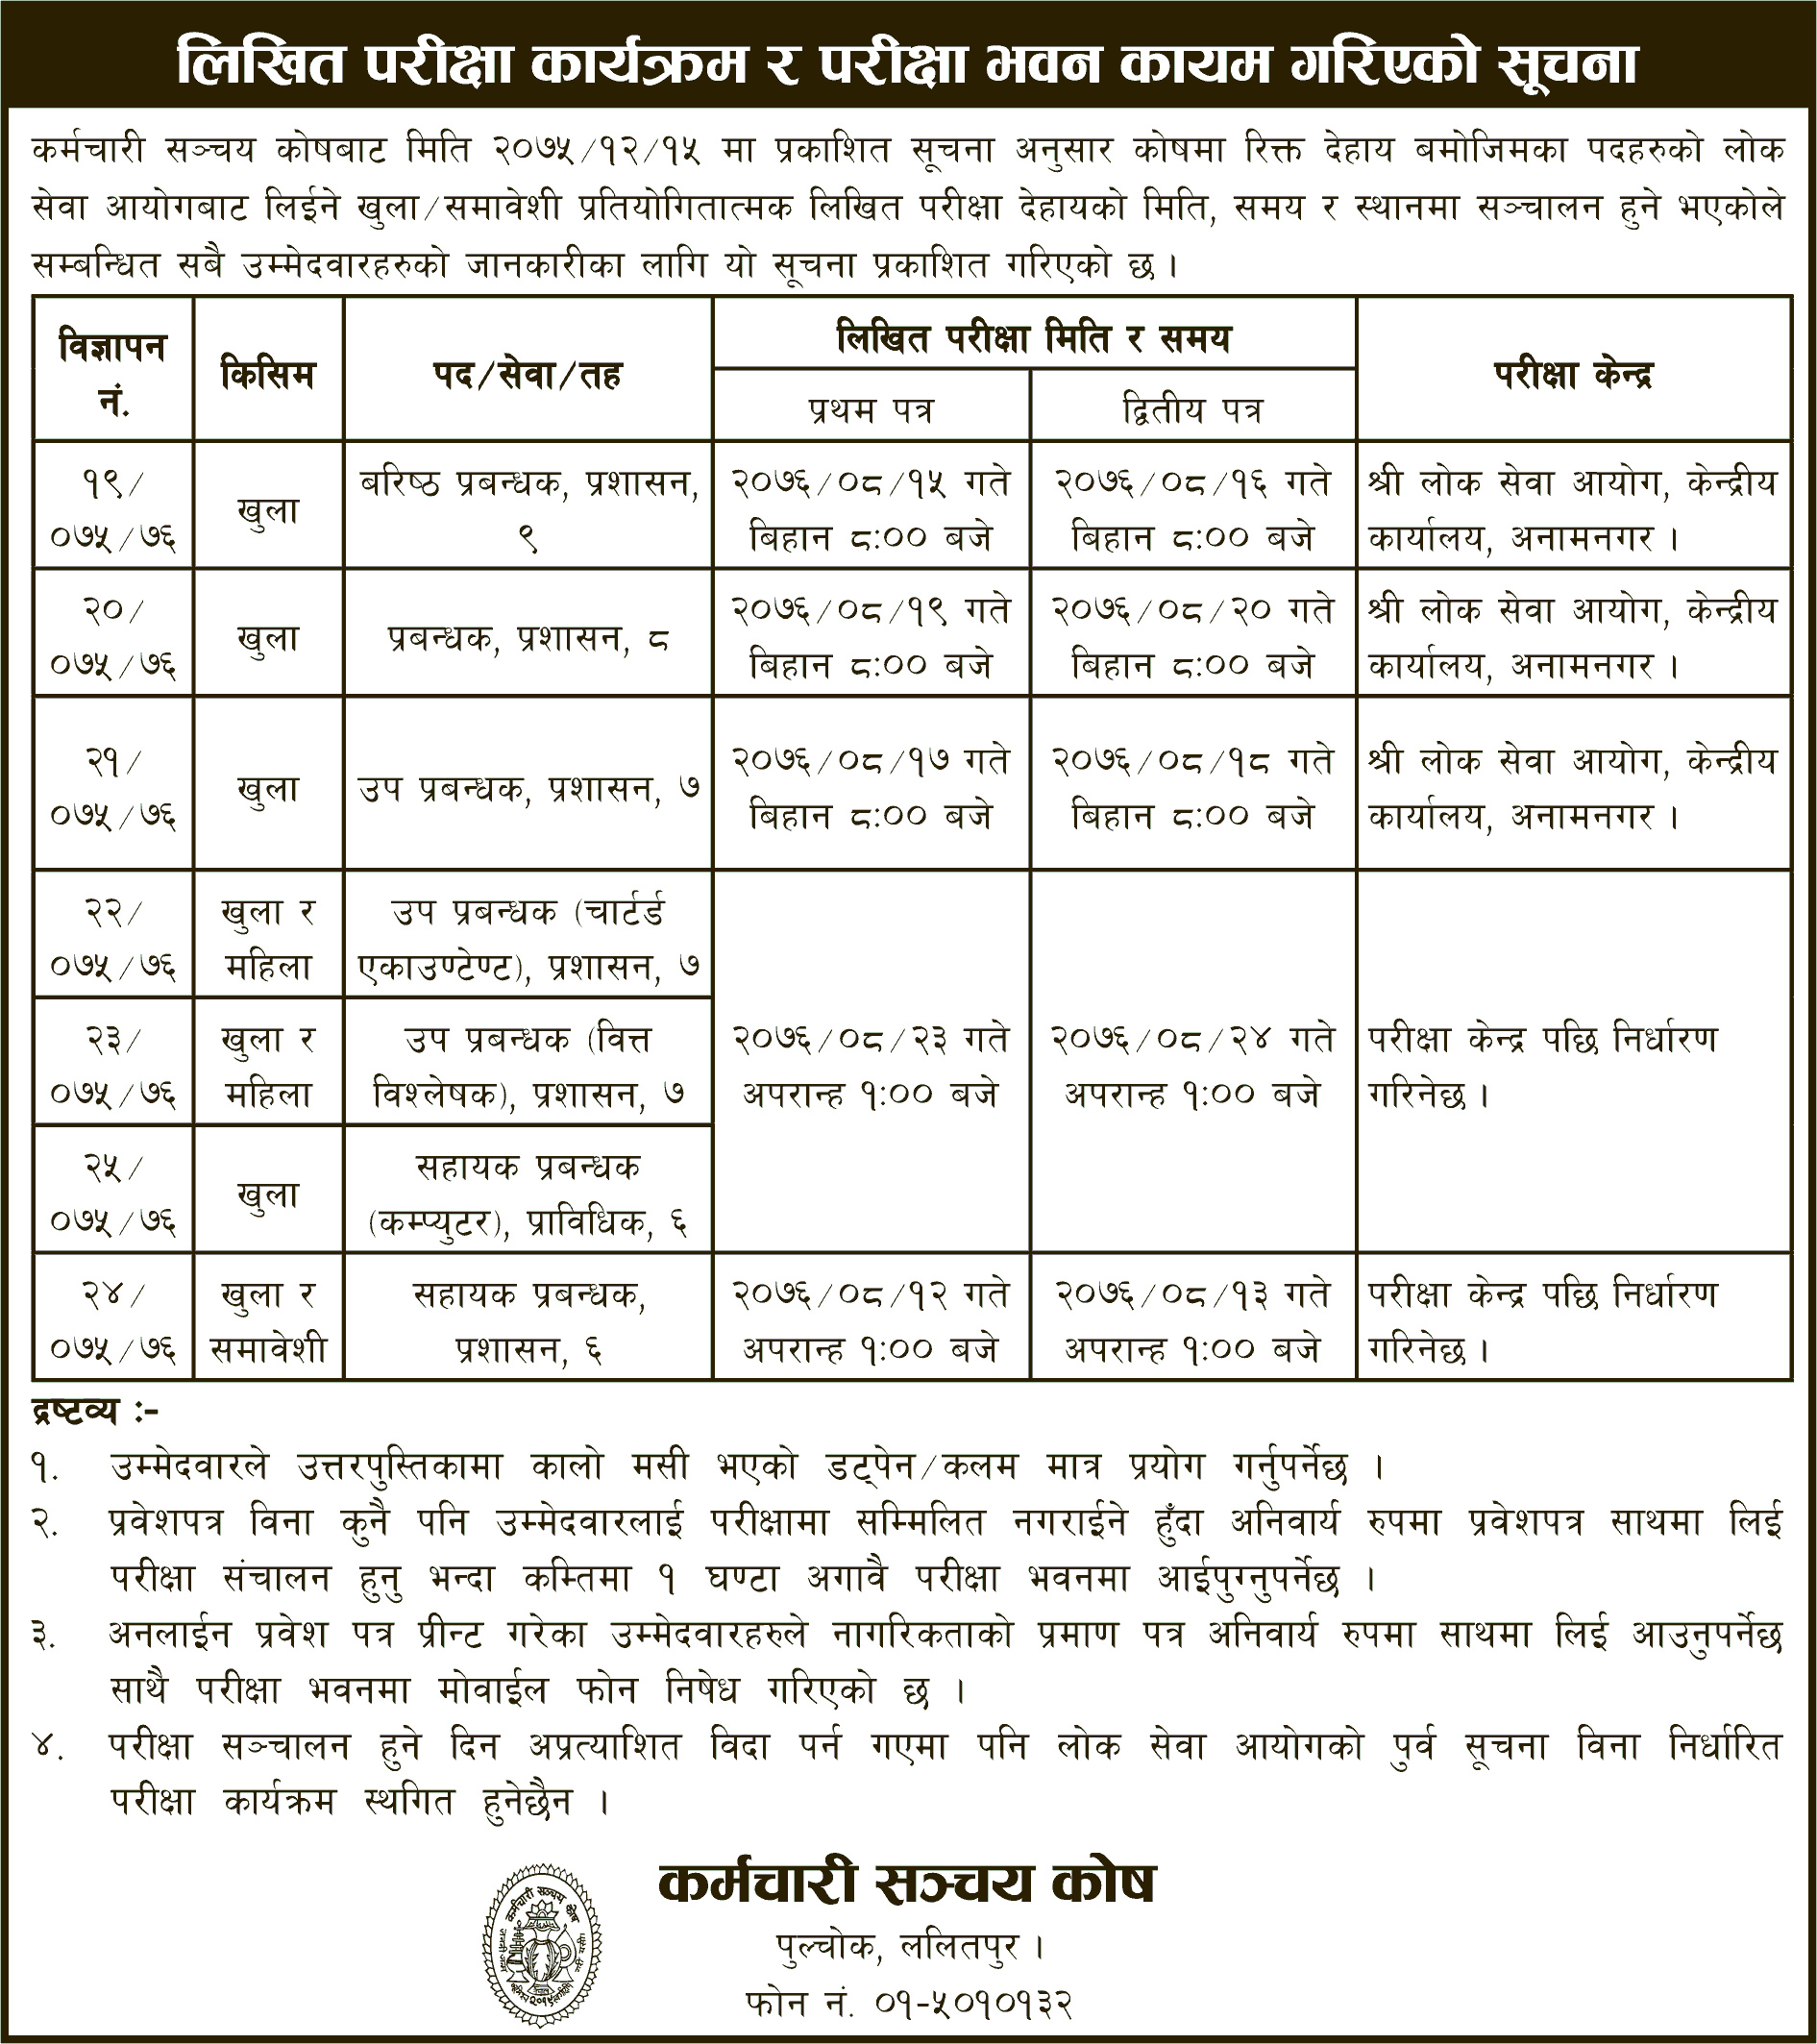 Karmachari Sanchaya Kosh Published Written Exam Schedule and Exam Center